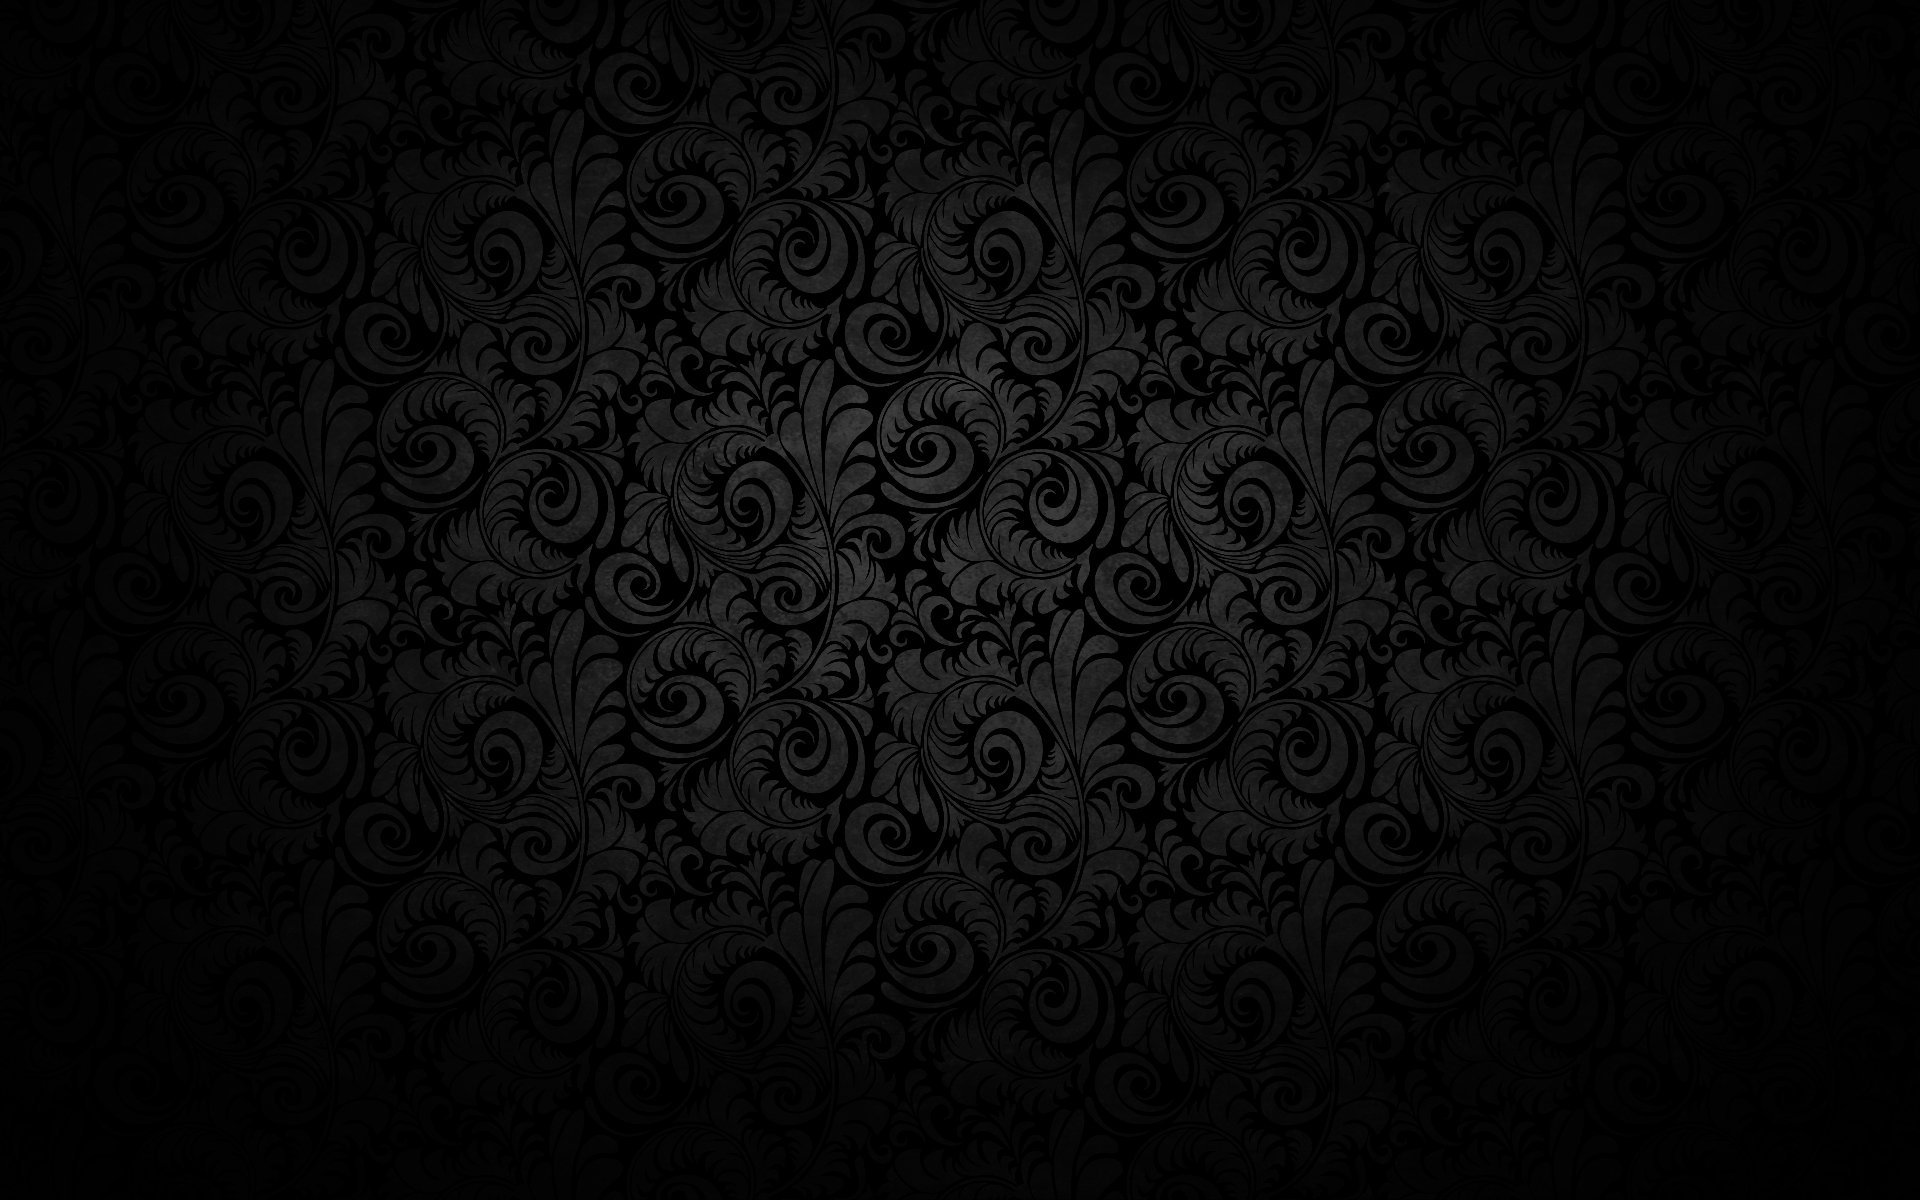 50+] Cool Black Wallpaper Background - WallpaperSafari